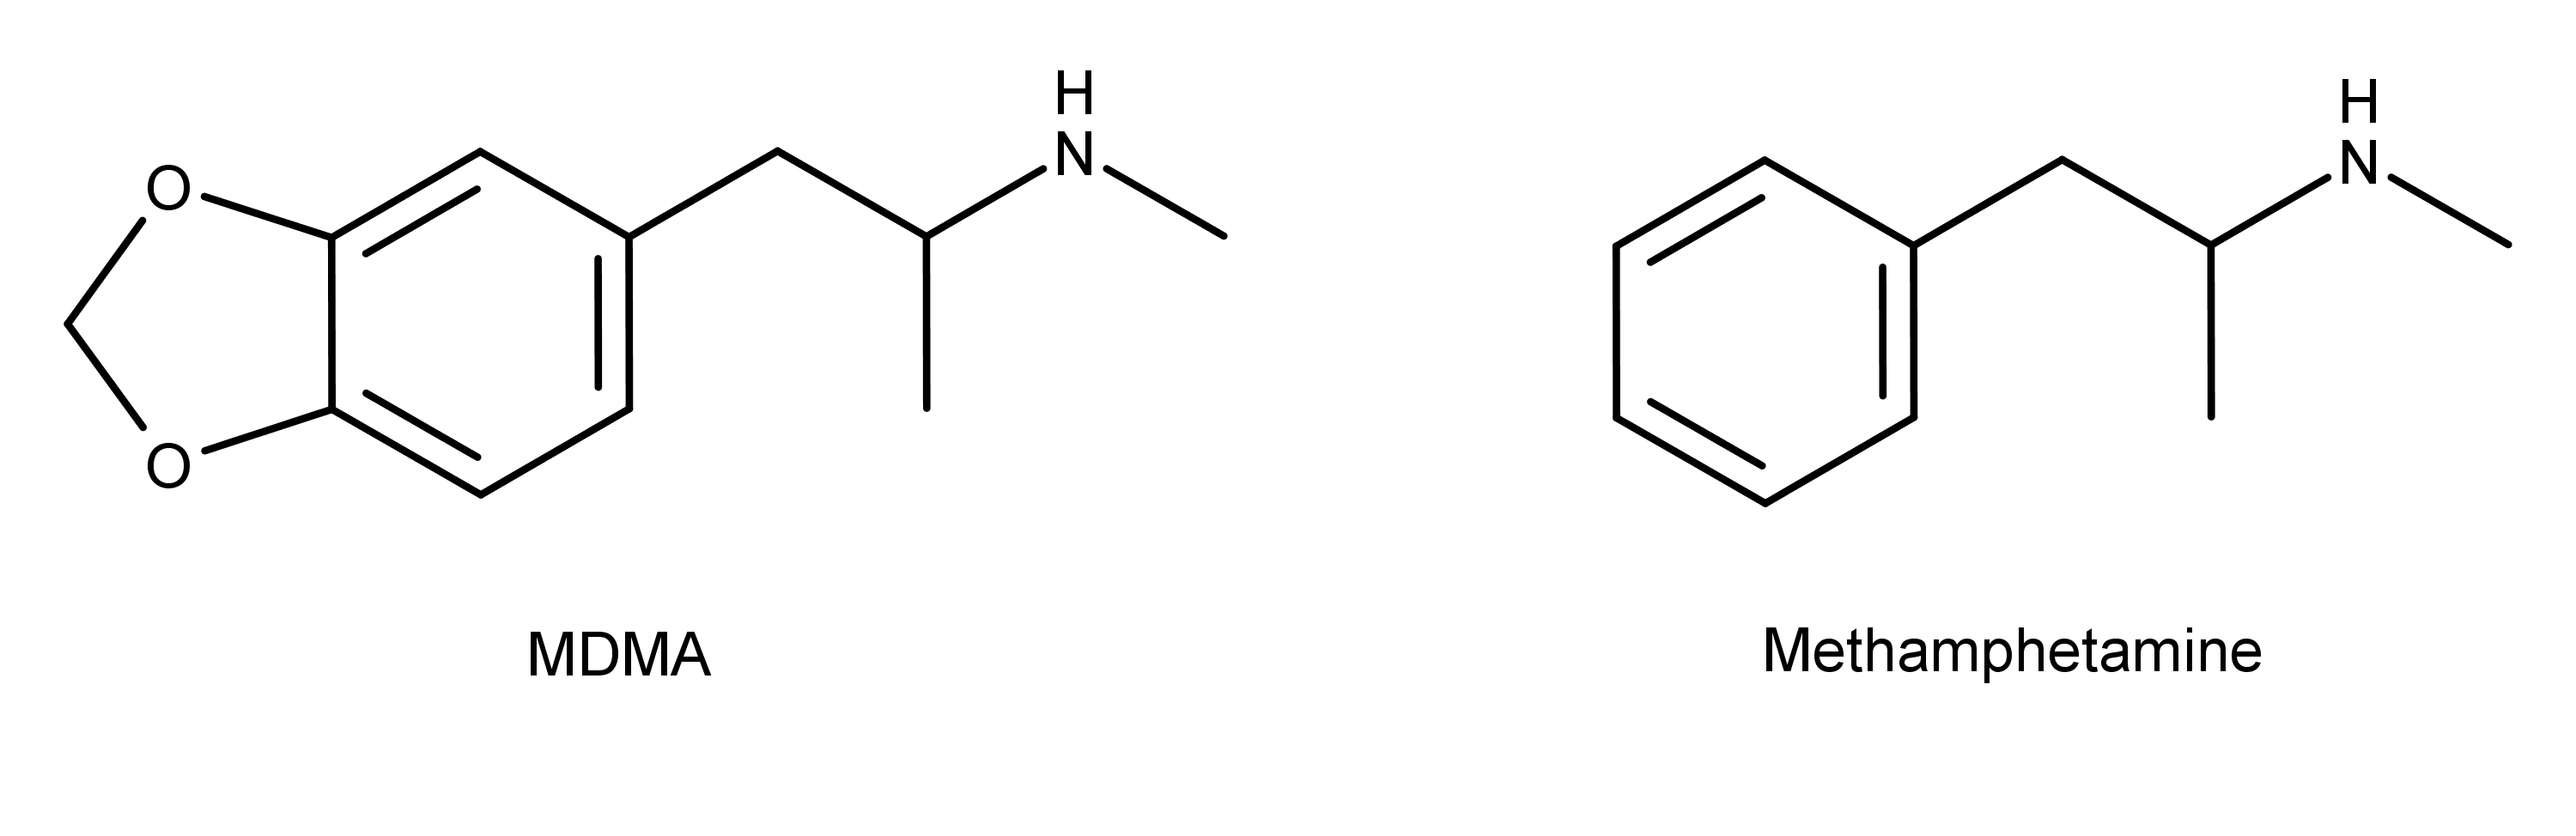 mdma and methamphetamine molecular structure